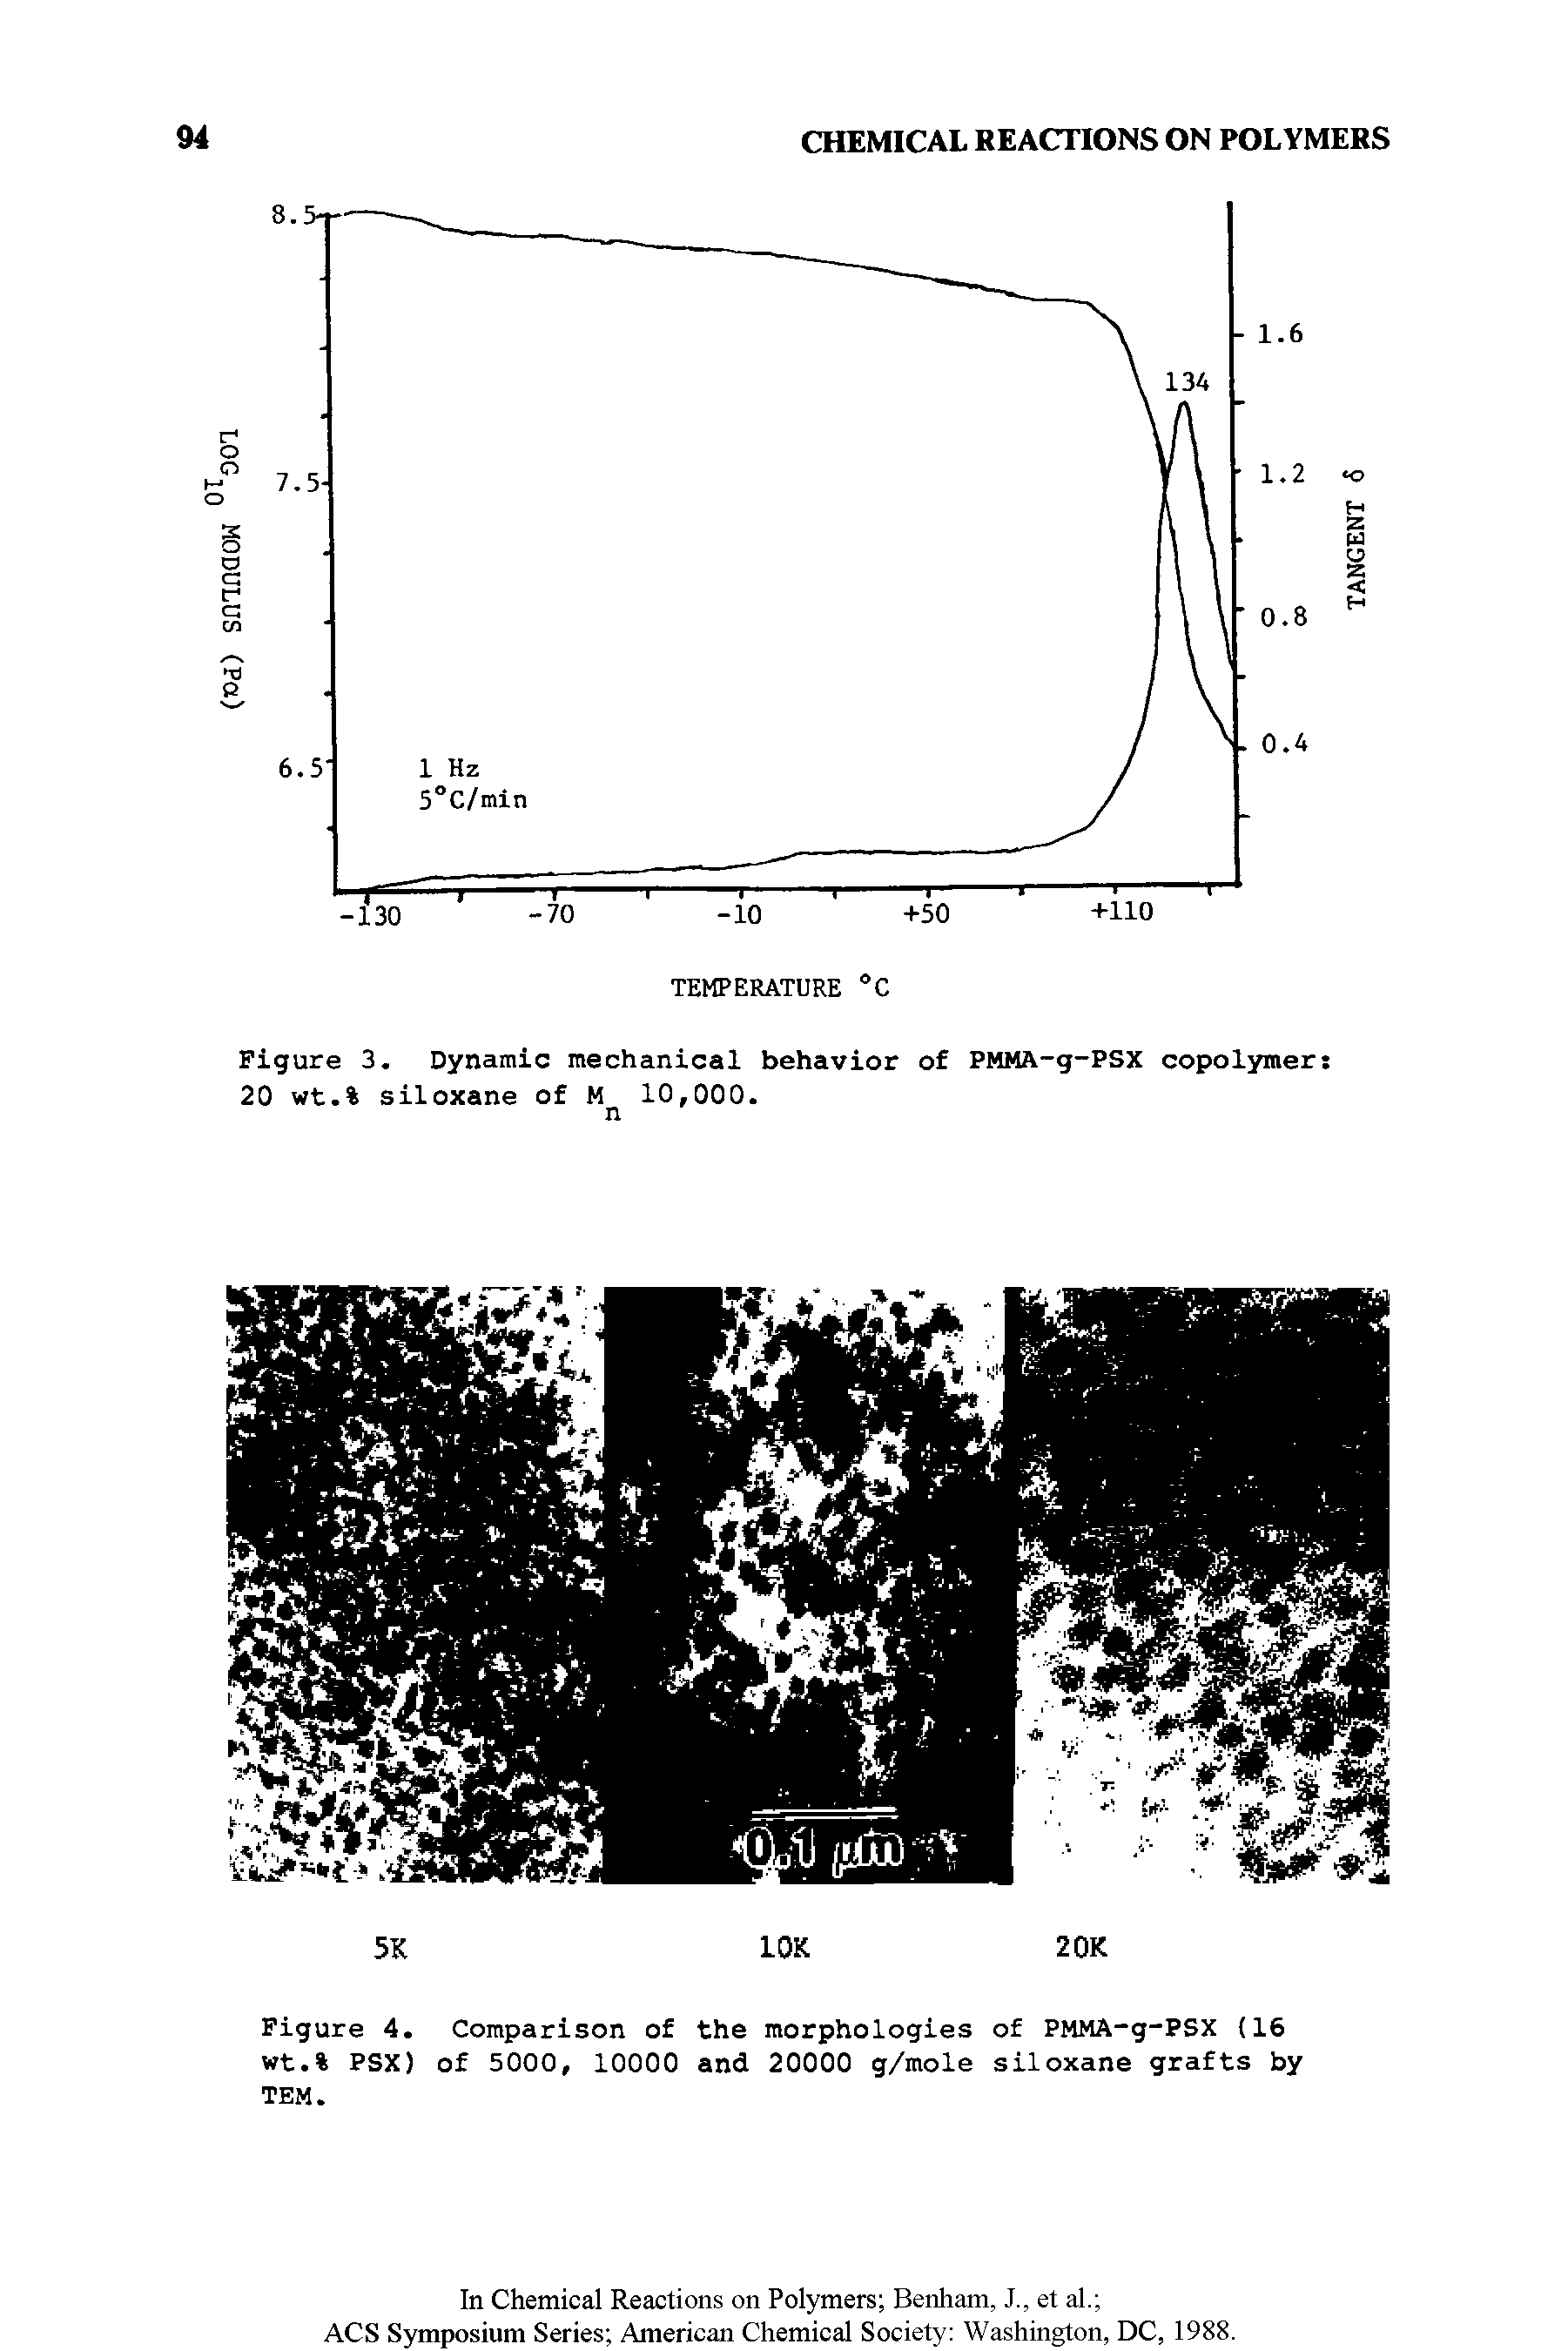 Figure 3. Dynamic mechanical behavior of PMMA-g-PSX copolymer 20 wt.% siloxane of M 10,000.